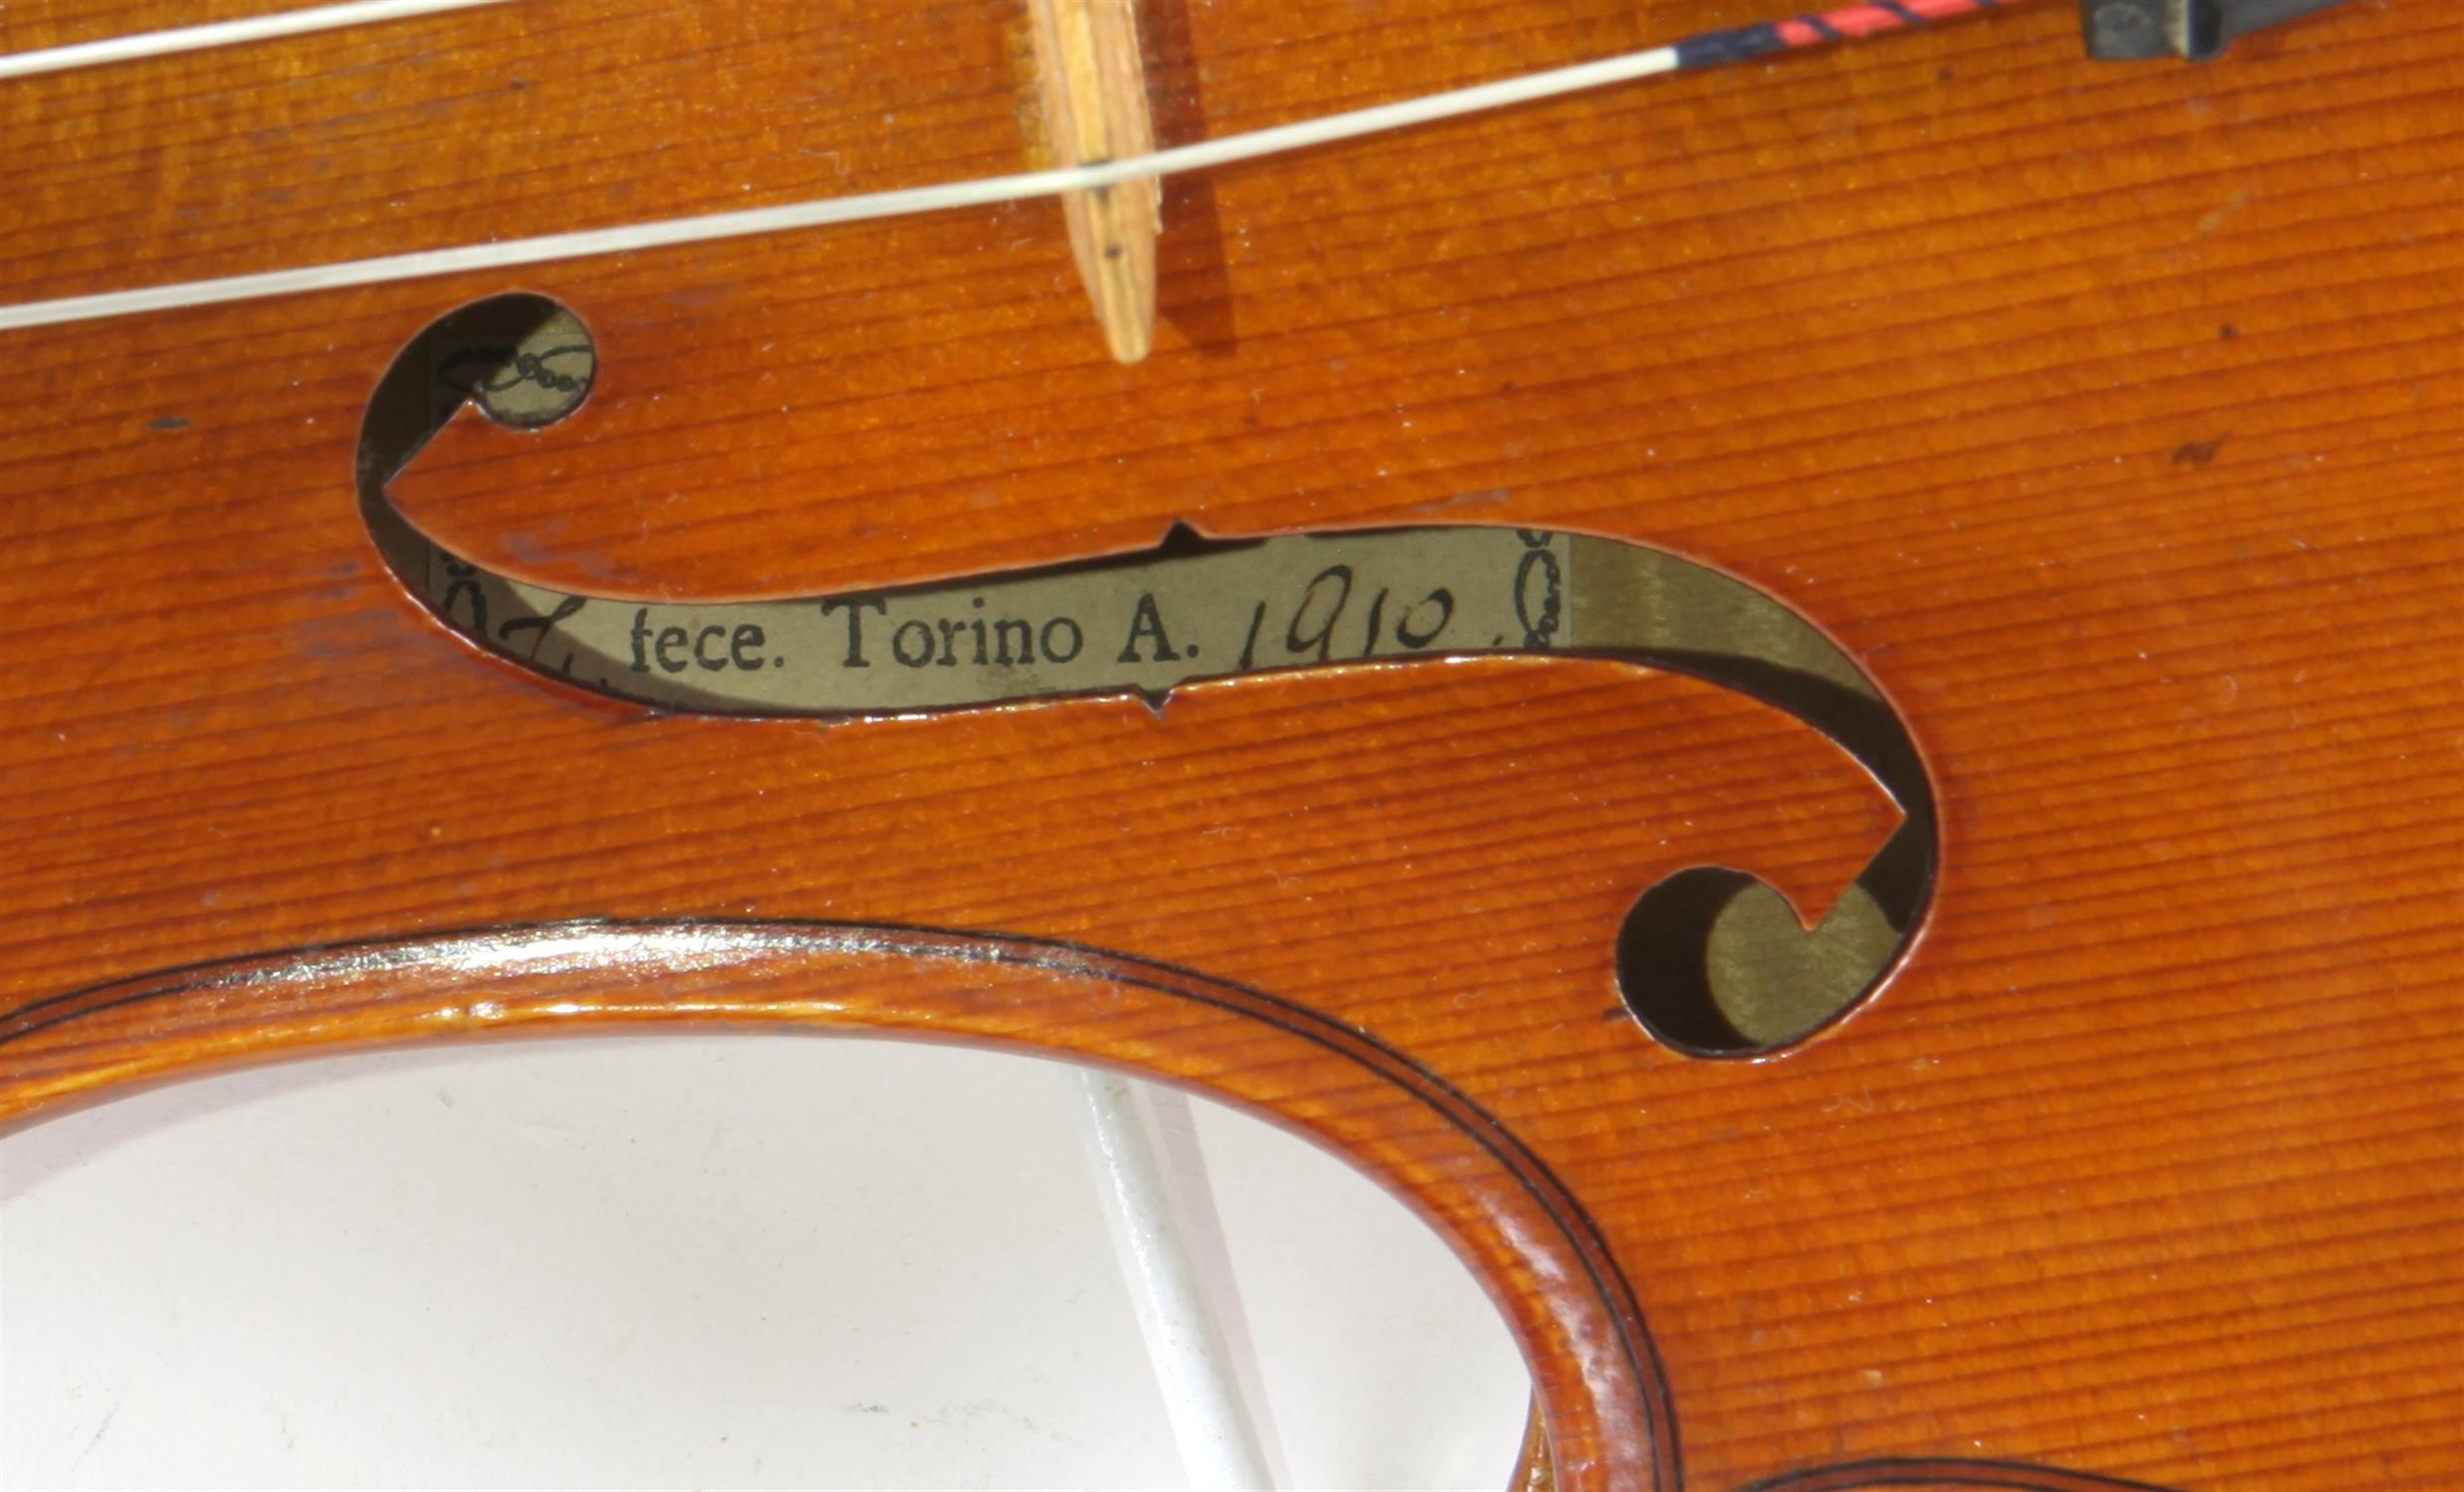 Carlo Giuseppe Oddone. A violin after Stradivari. Labelled Carlo Giuseppe Oddone fece. Torino A. - Image 14 of 39